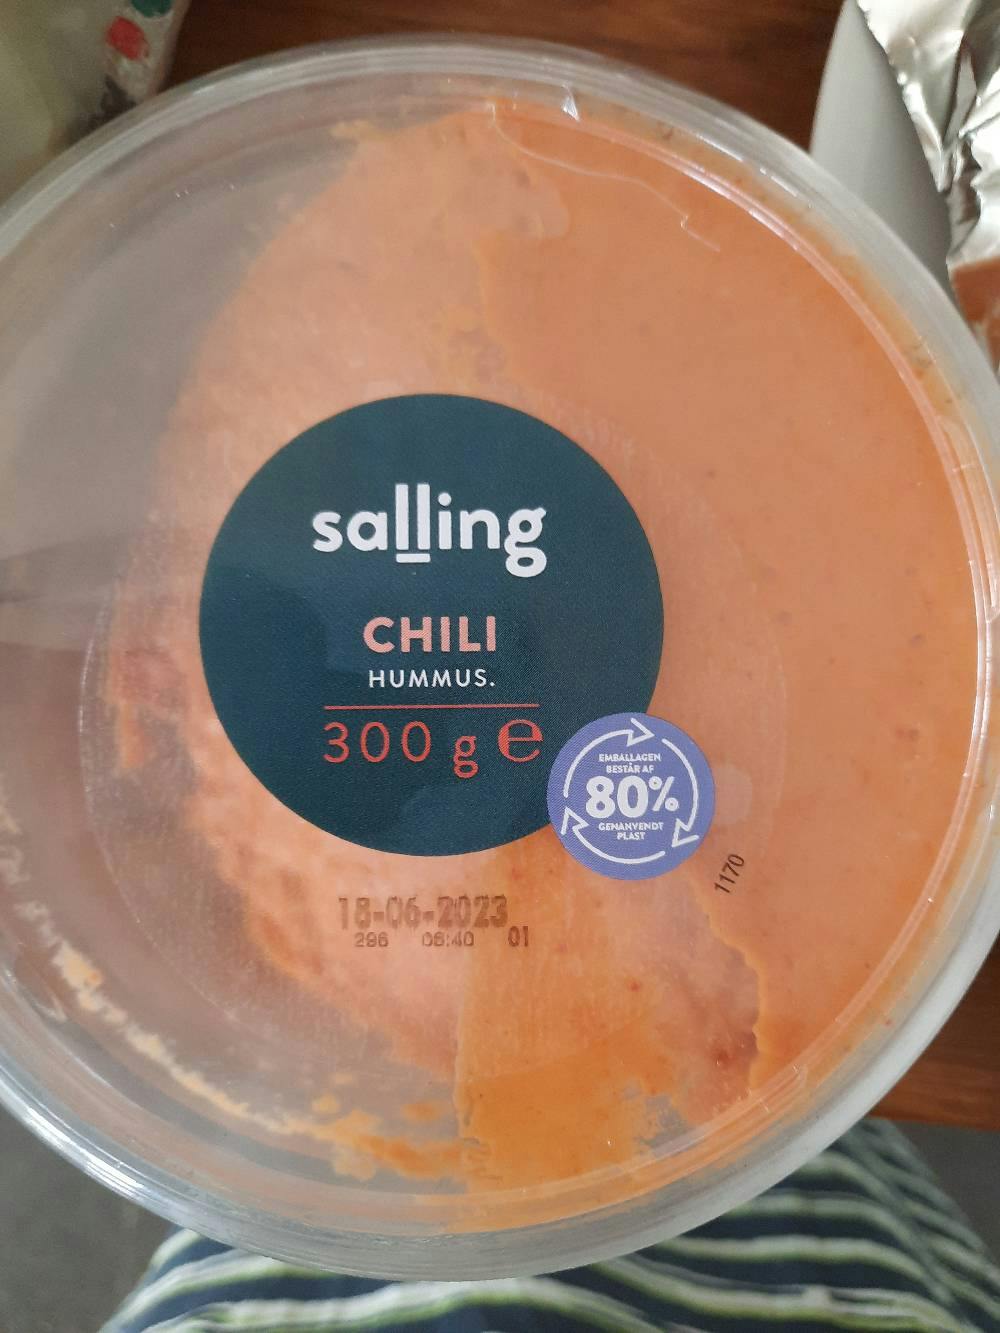 Chilihummus, Salling